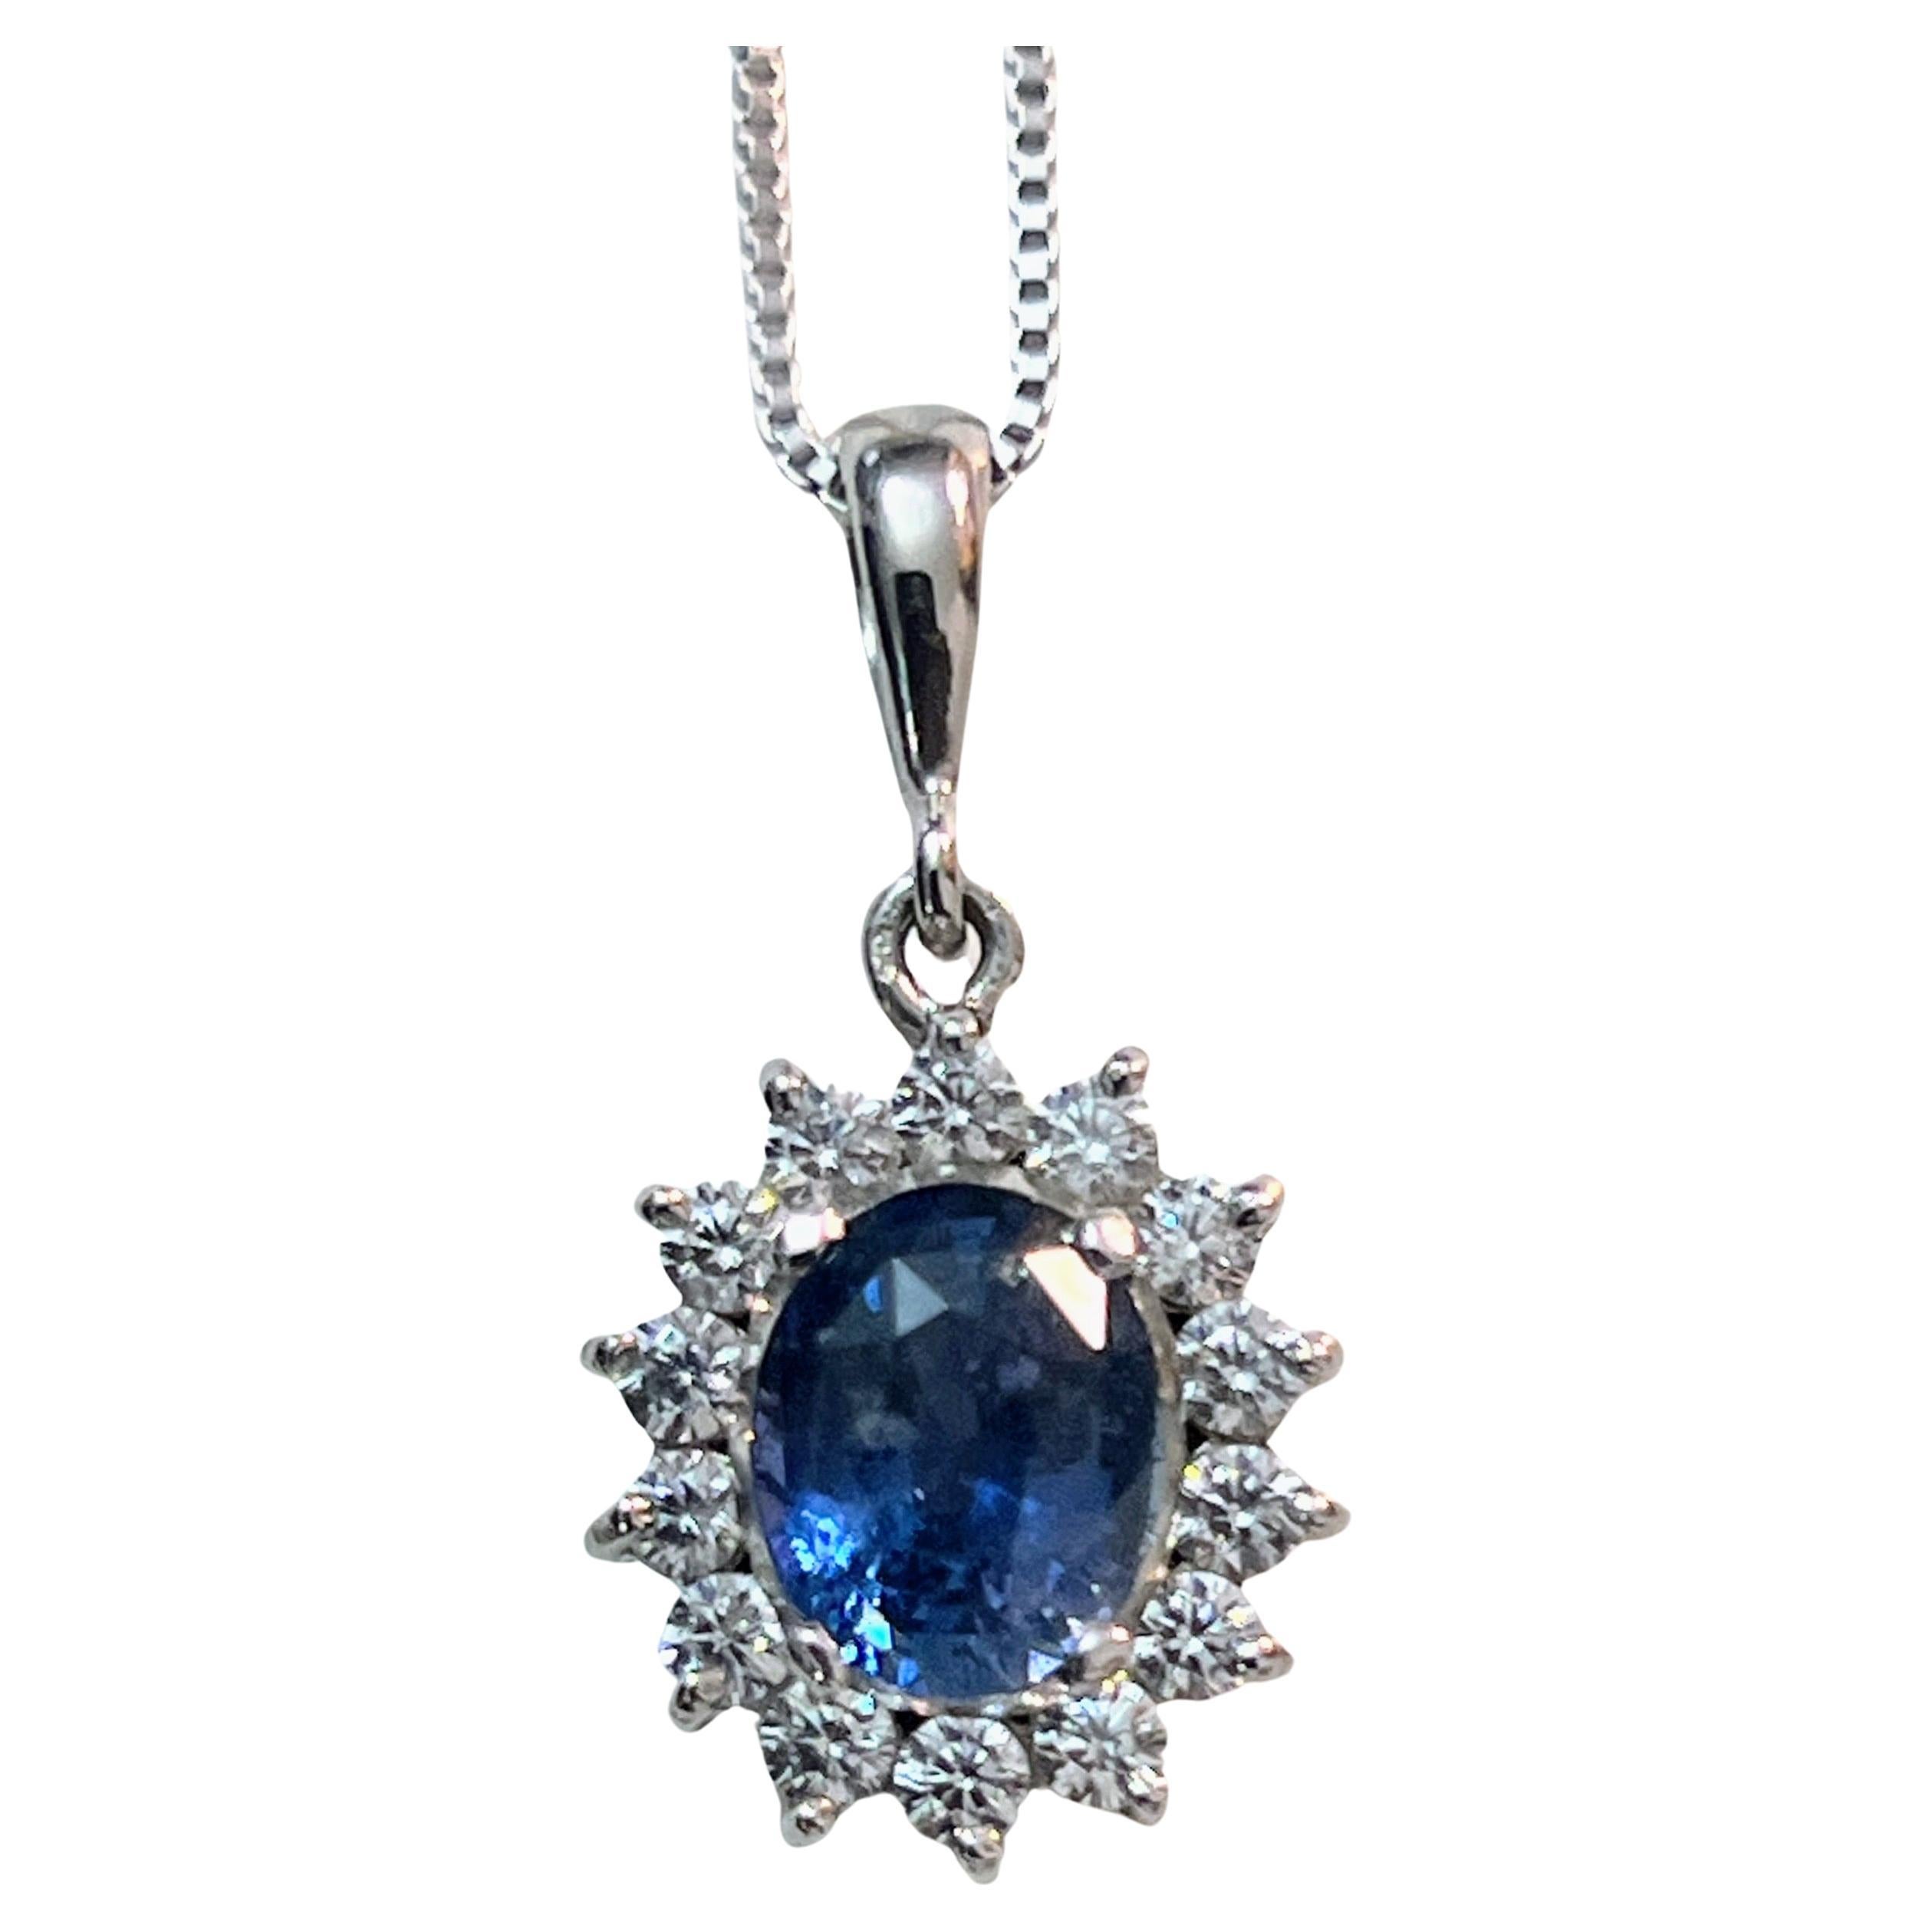 3ct Oval Cut Natural Blue Sapphire Pendant Necklace